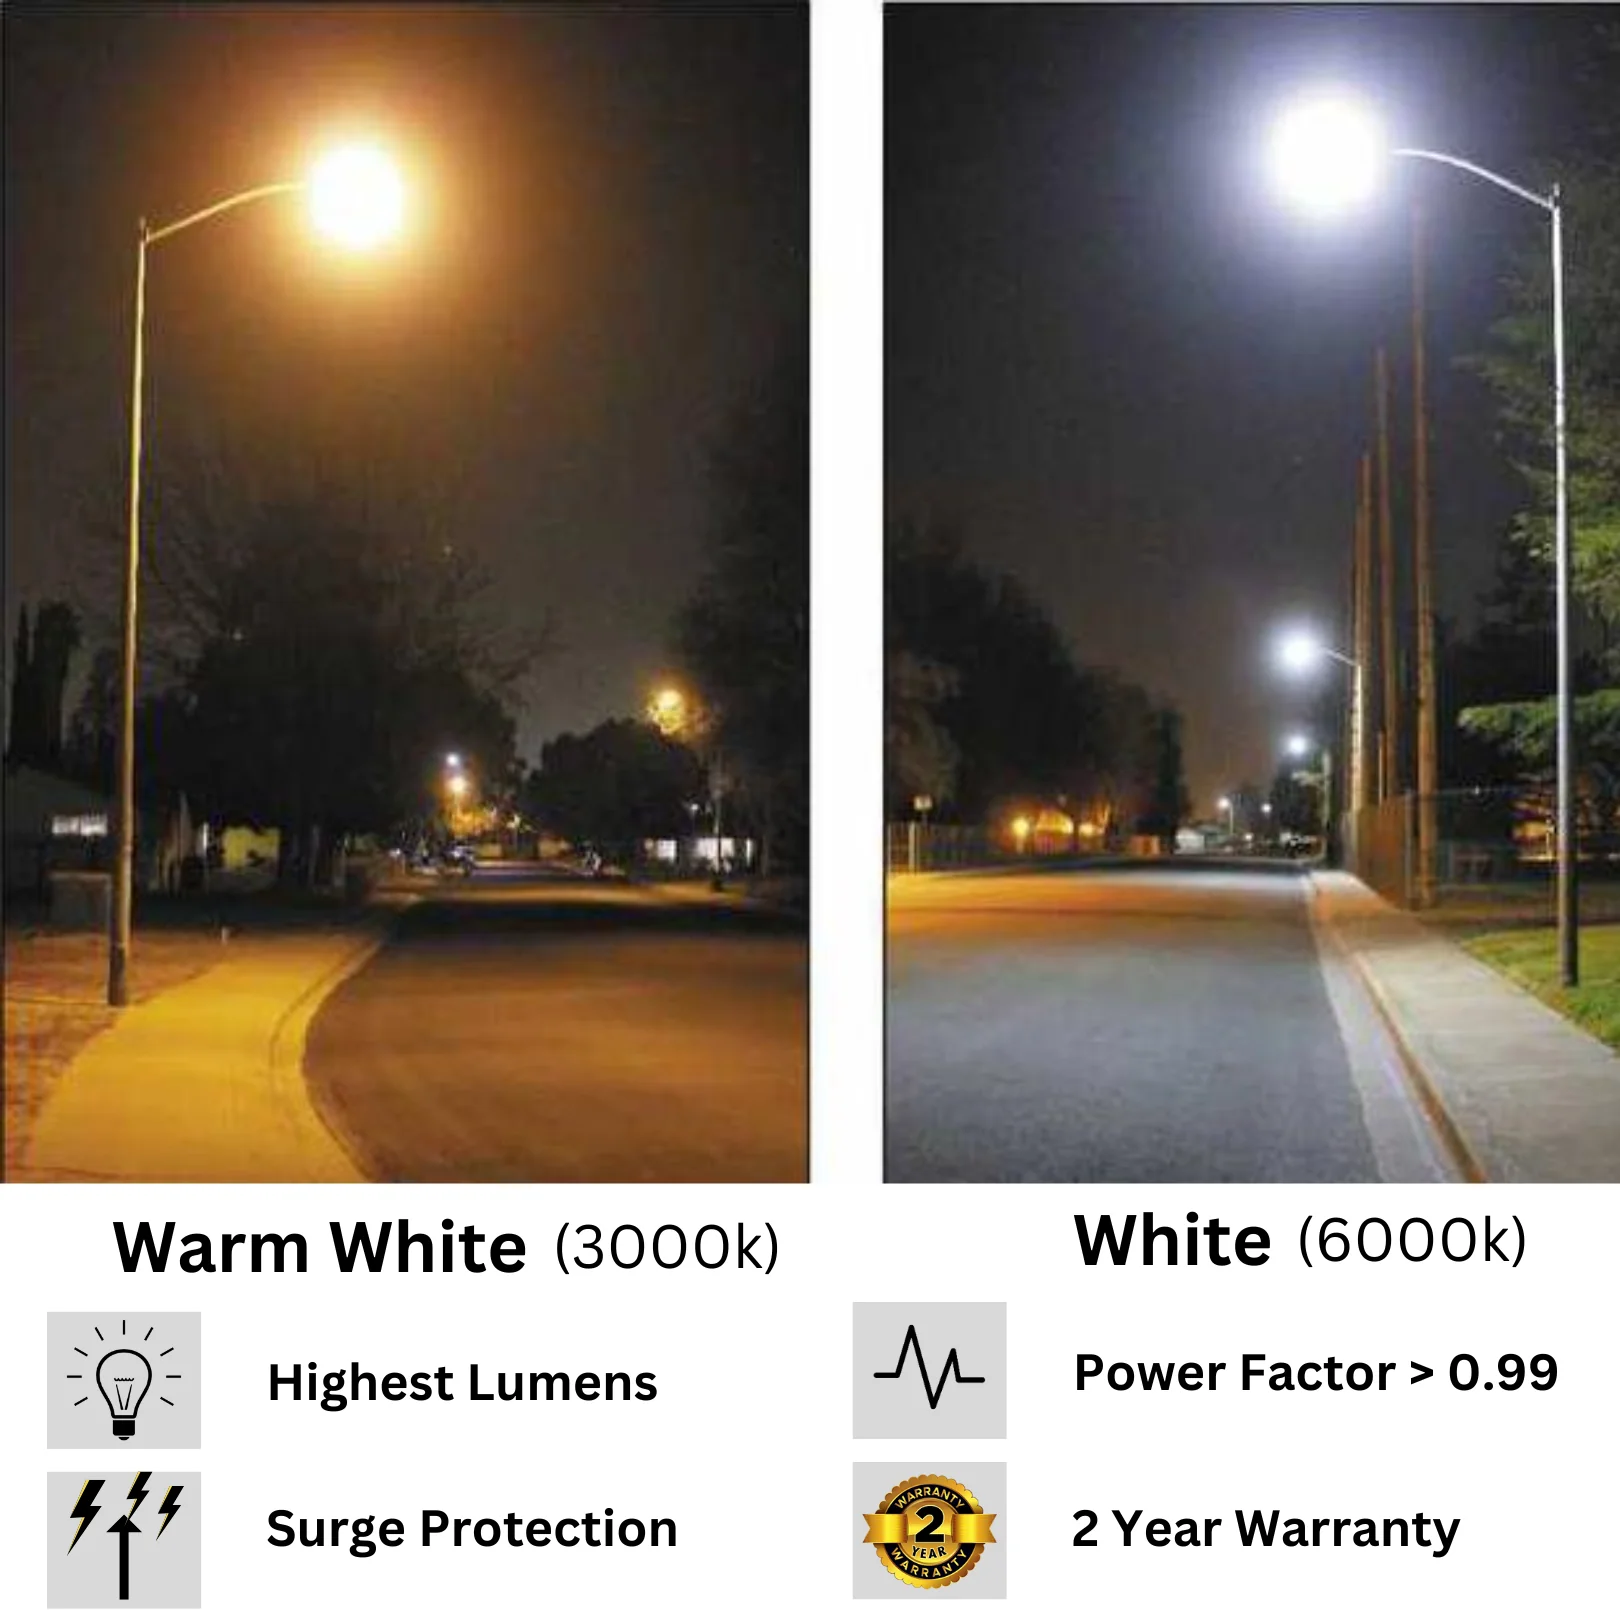 30 Watt LED Street Light Waterproof IP65 for Outdoor Purposes